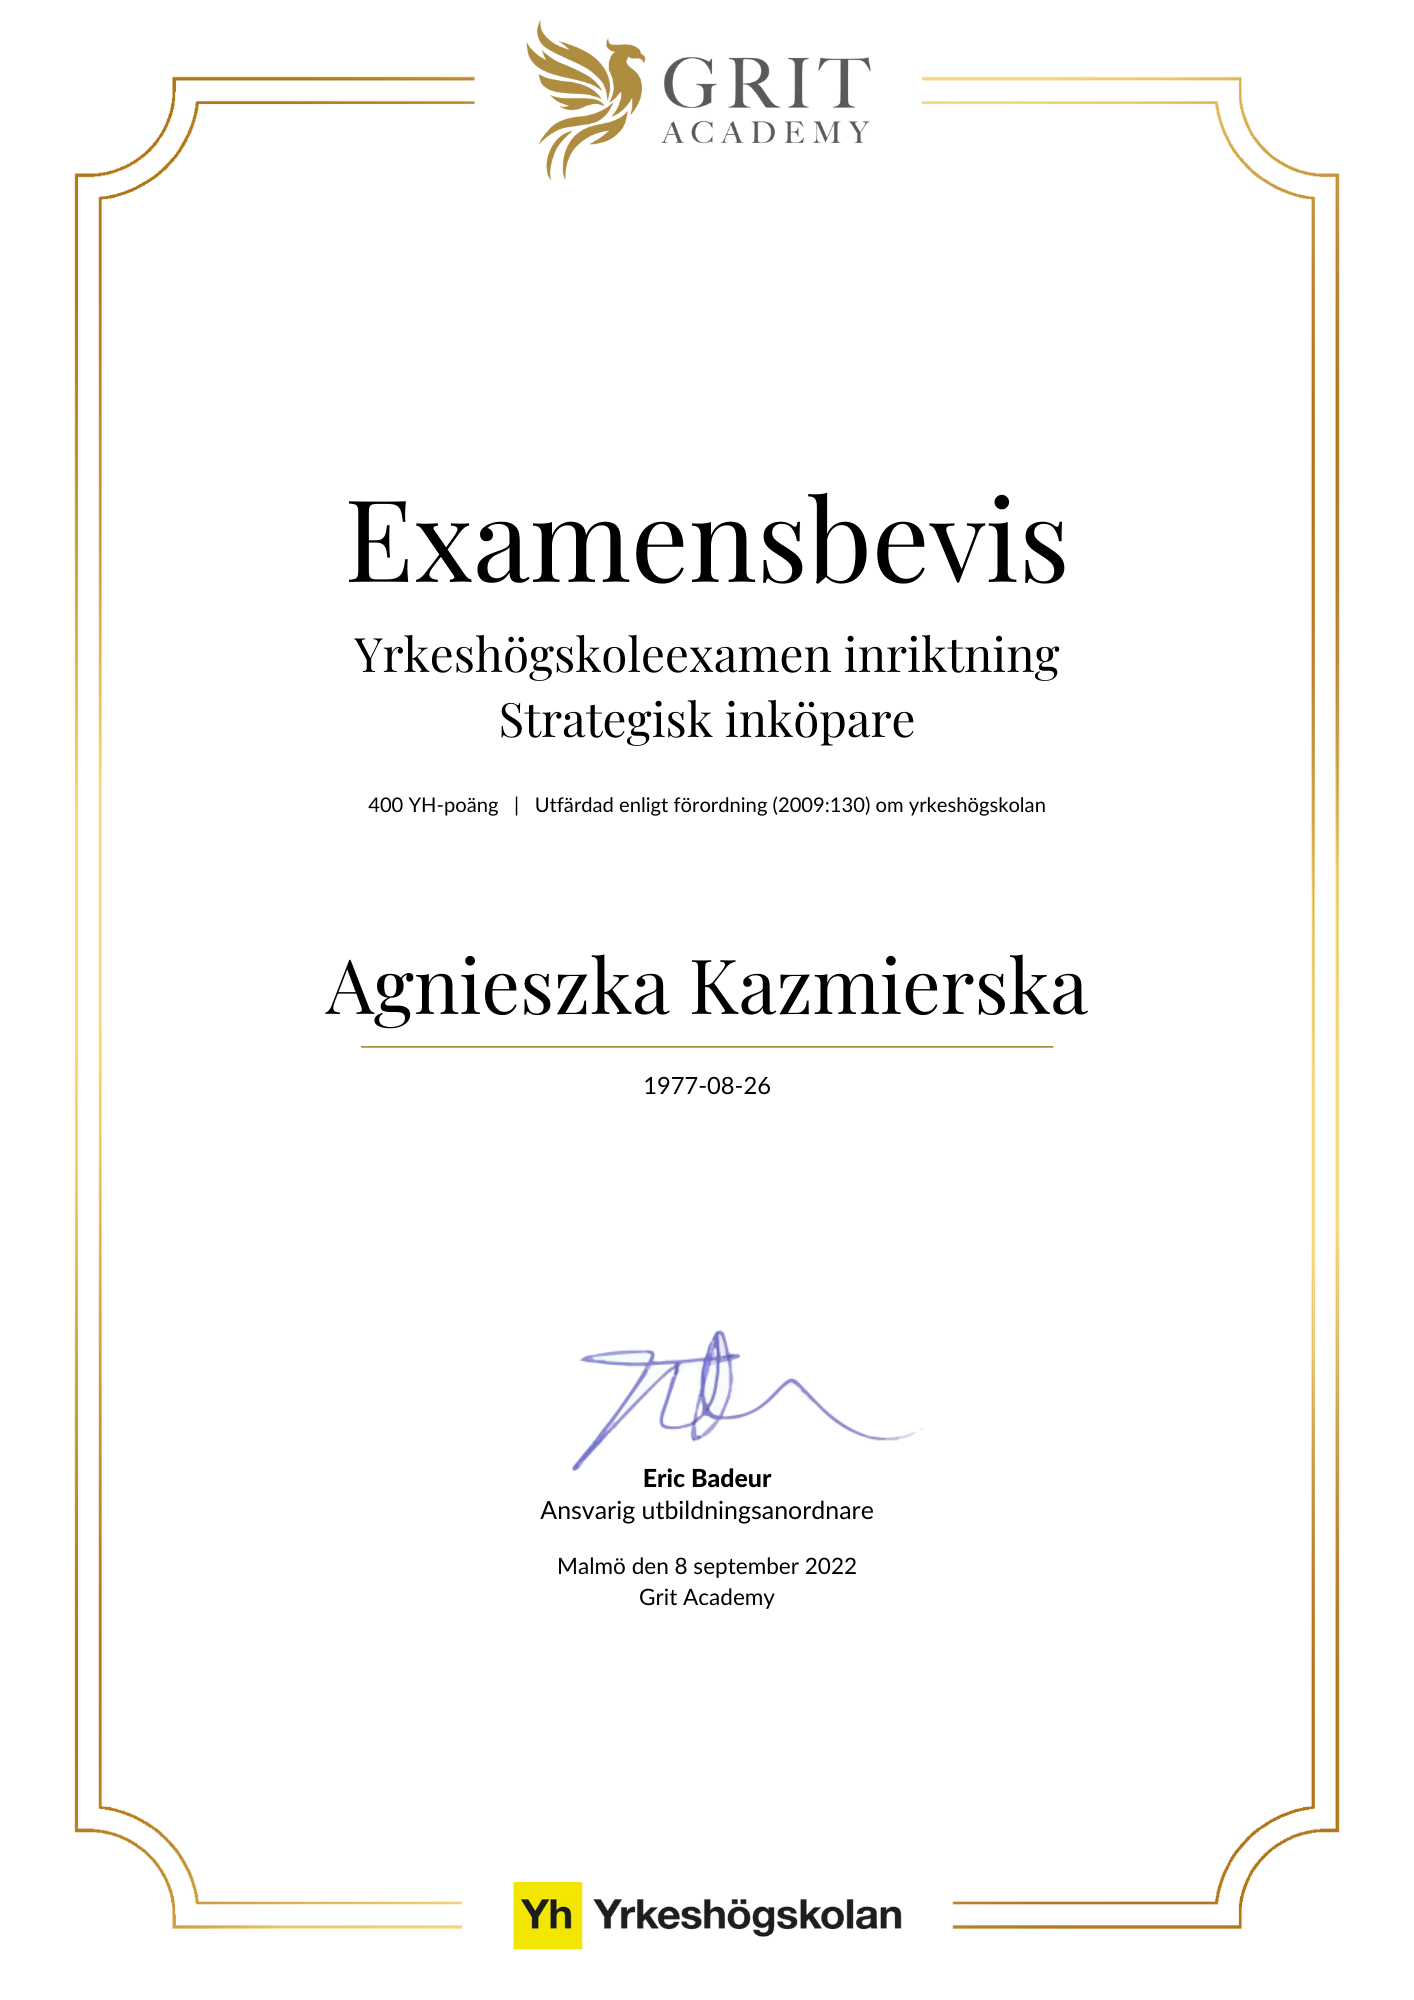 Examensbevis Agnieszka Kazmierska - 1